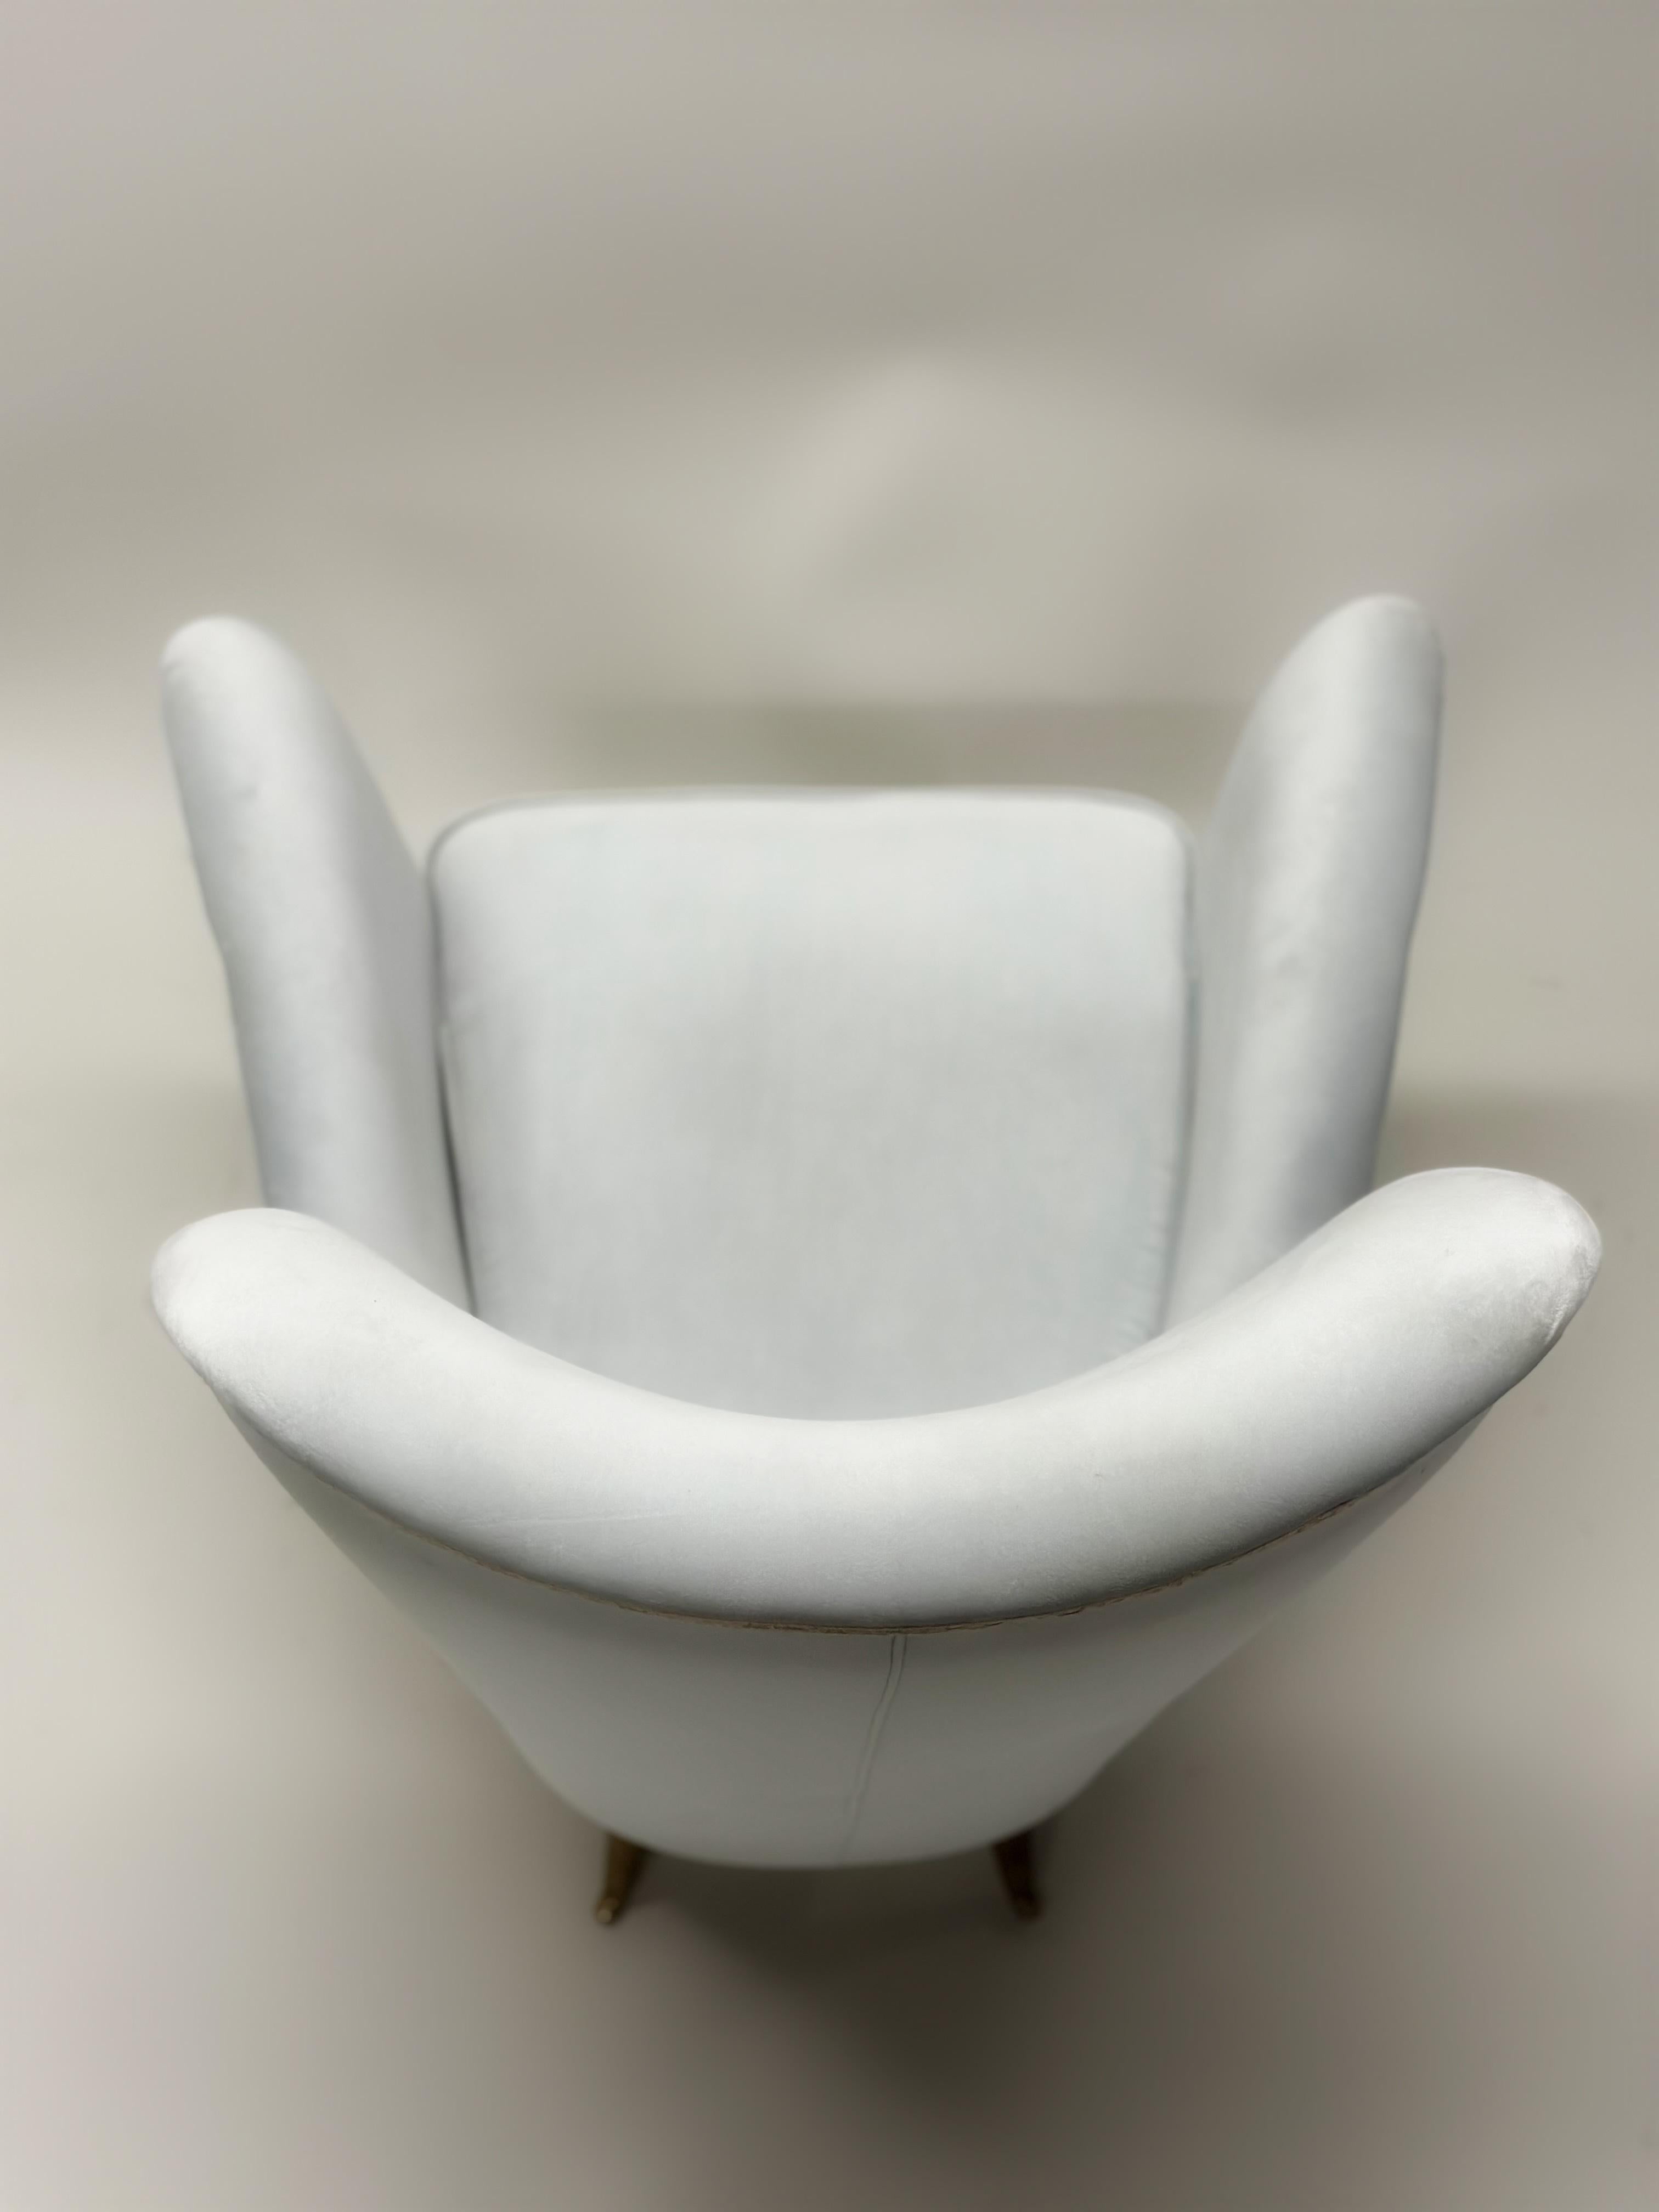 Pair of Italian Mid-Century Modern Lounge Chairs by Isa Bergamo & Att Gio Ponti  For Sale 7